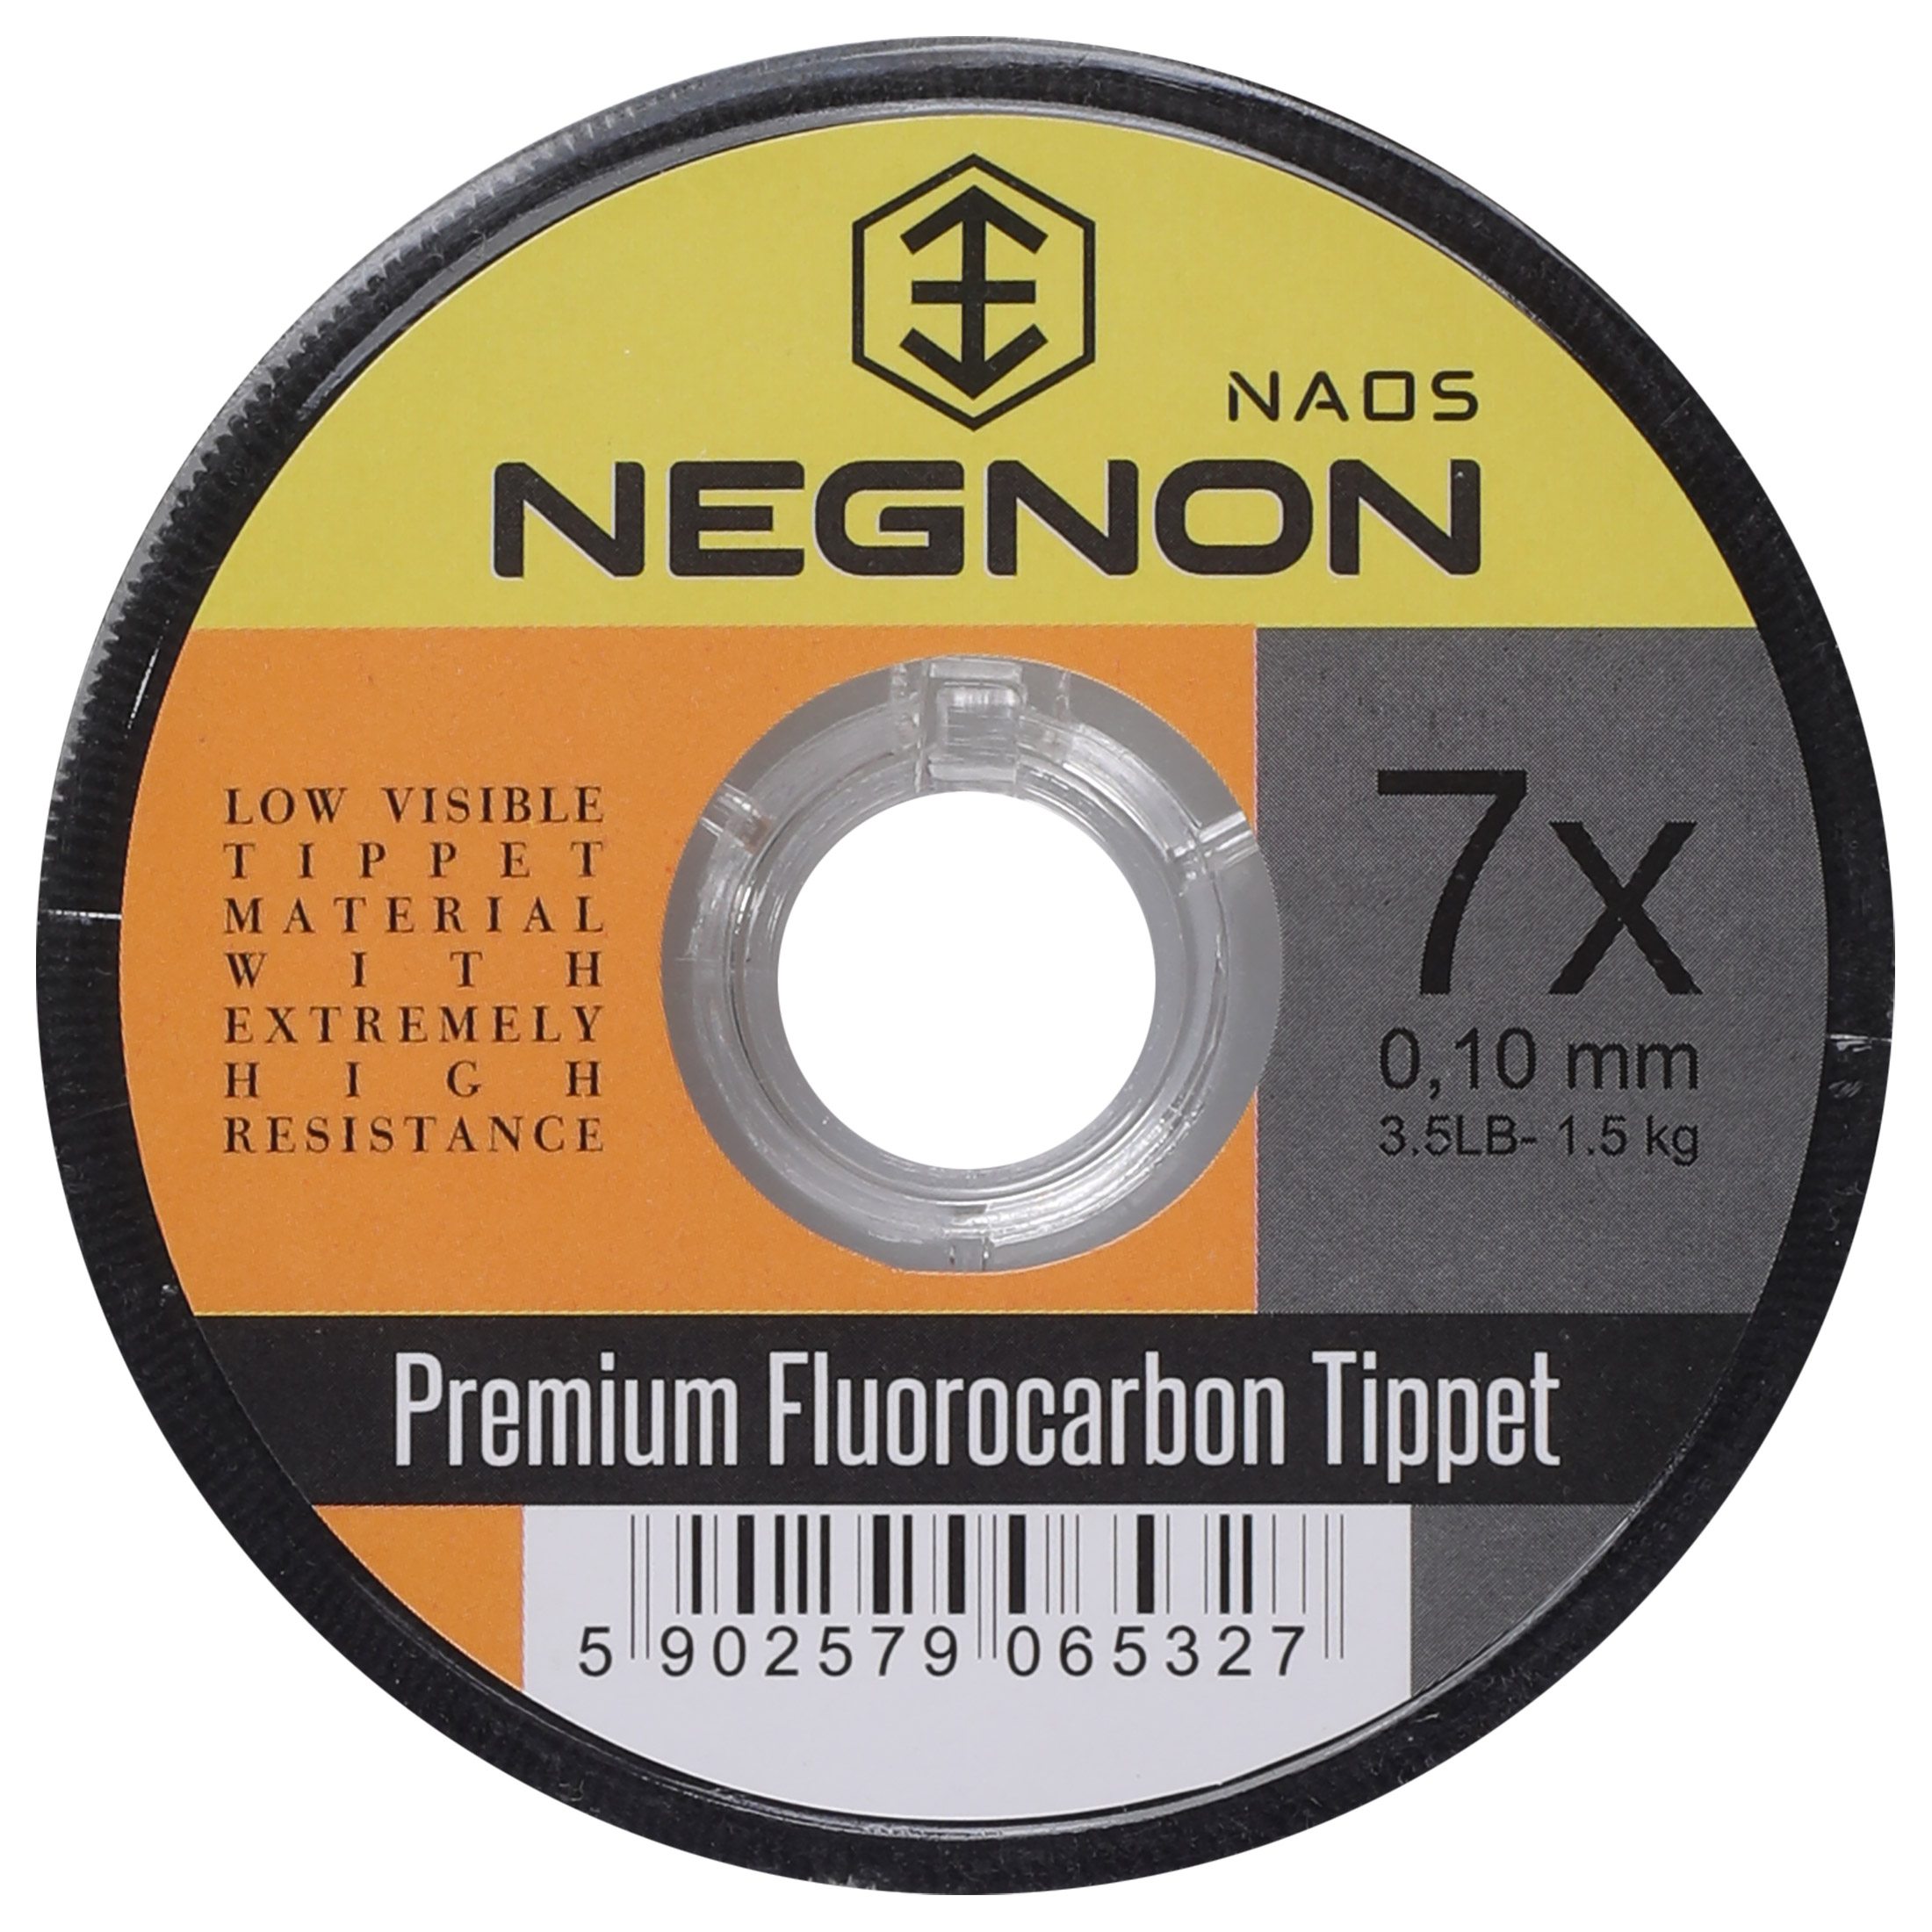 Negnon Naos Fluorocarbon Tippet, Fly Fishing Tippets - Taimen